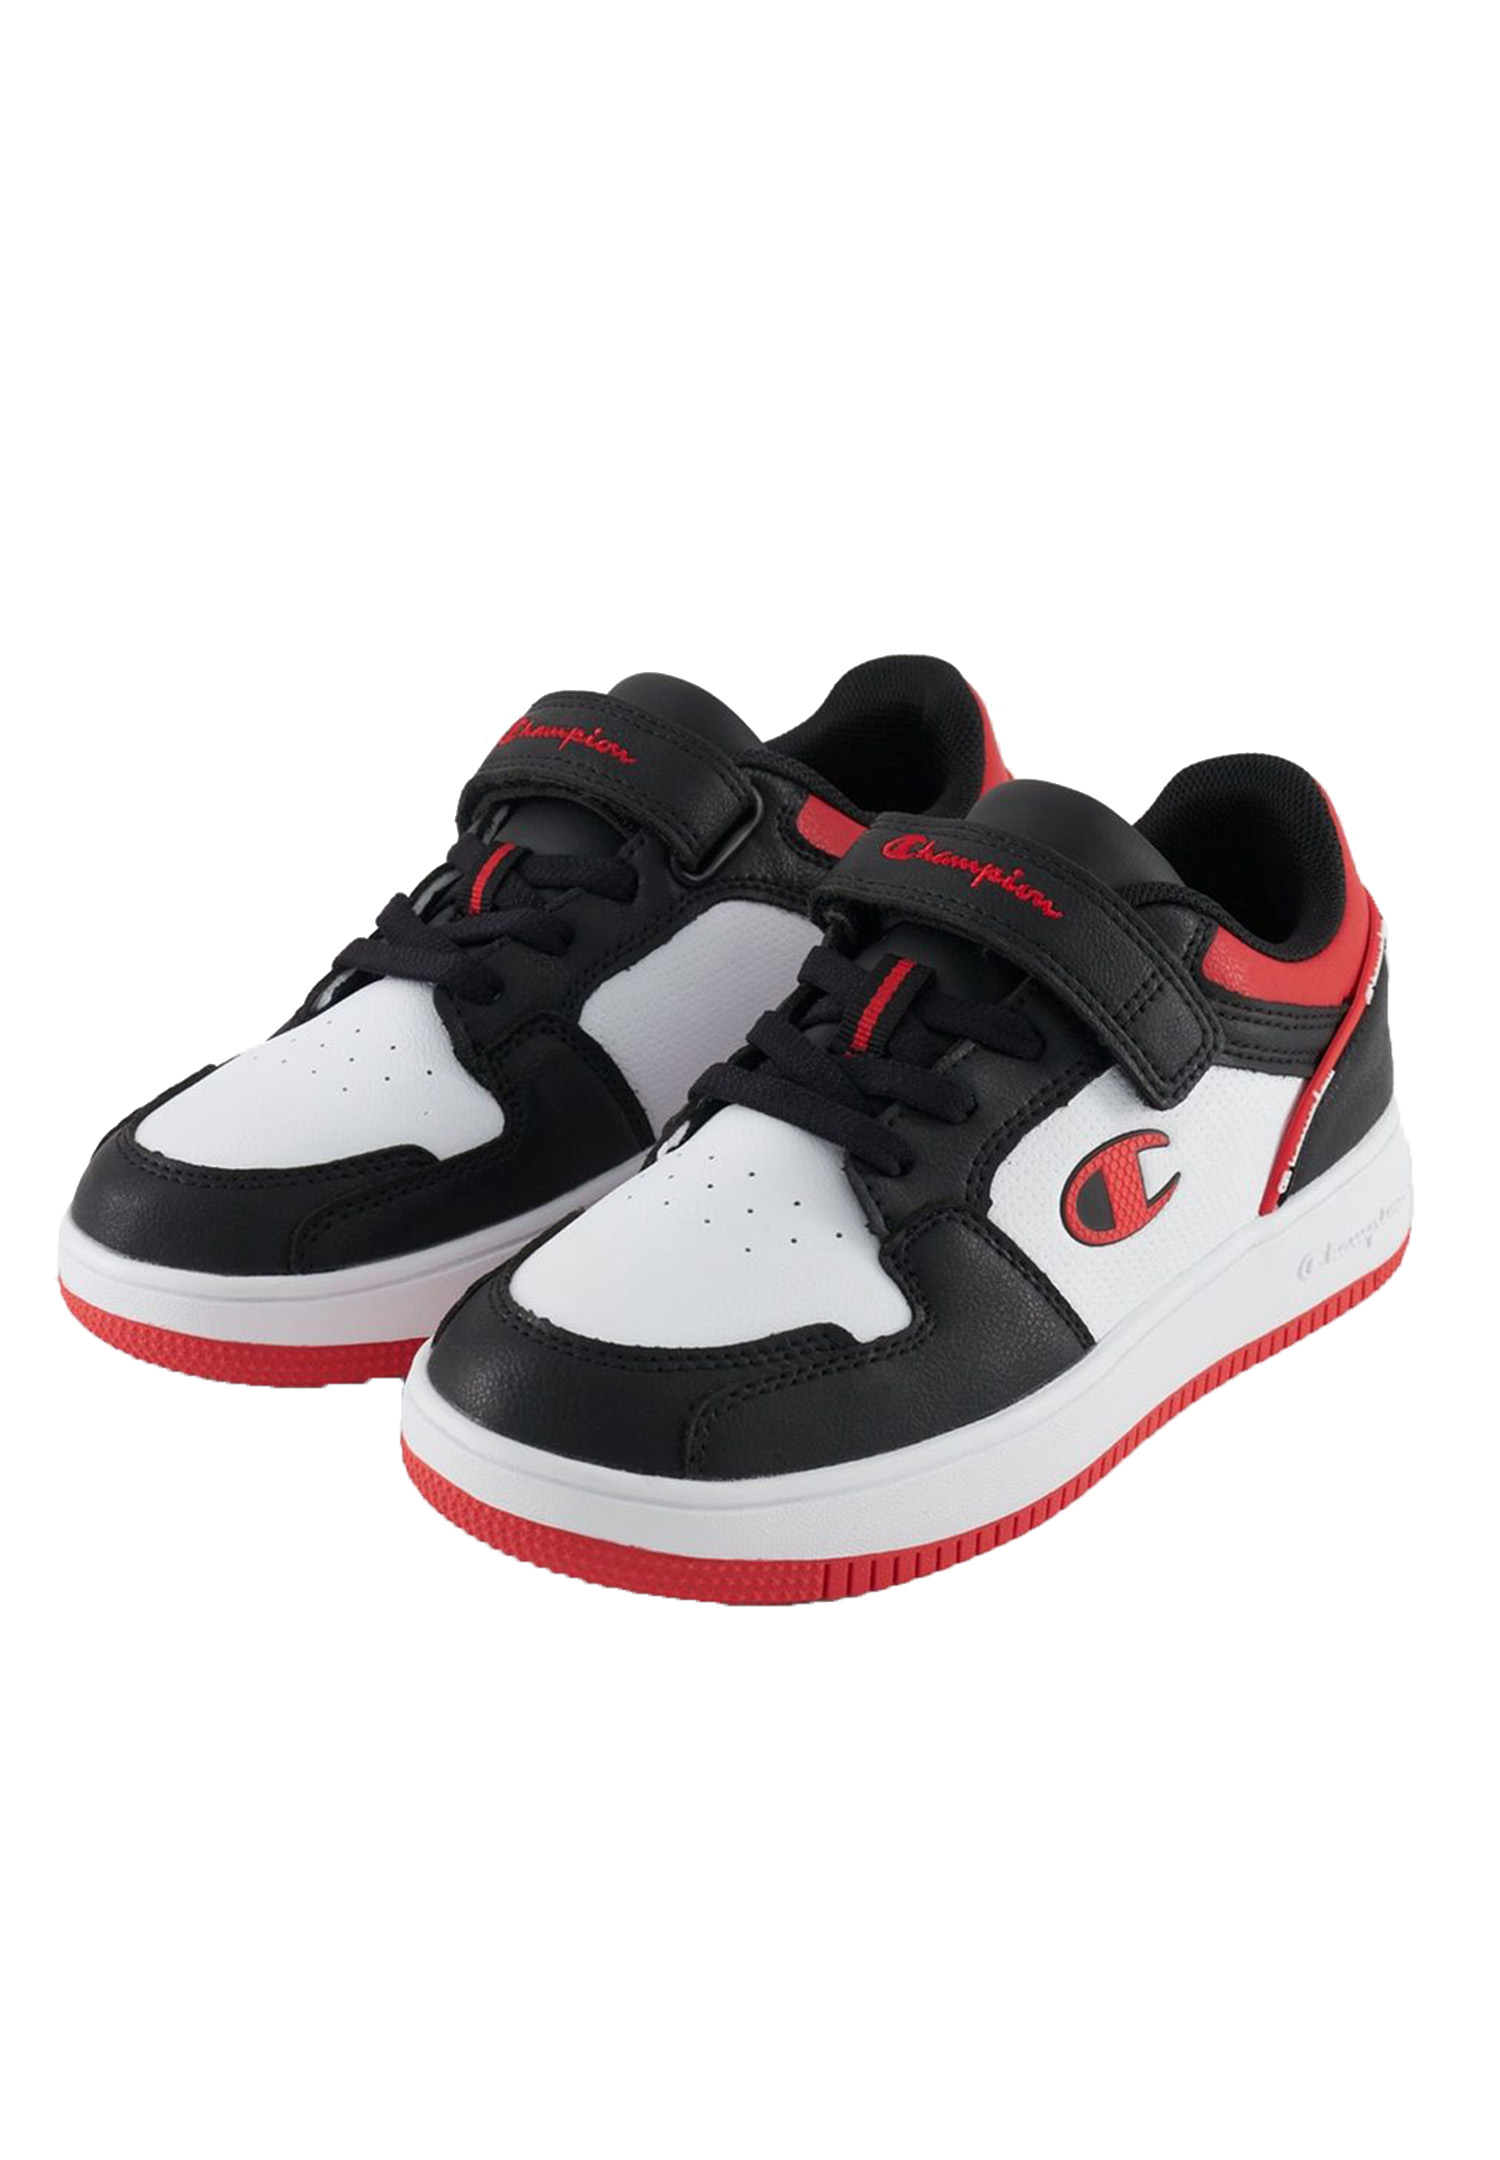 Champion REBOUND 2.0LOW Kinder Sneaker Unisex S32414-CHA-KK003 weiss/schwarz /rot | Sneaker high